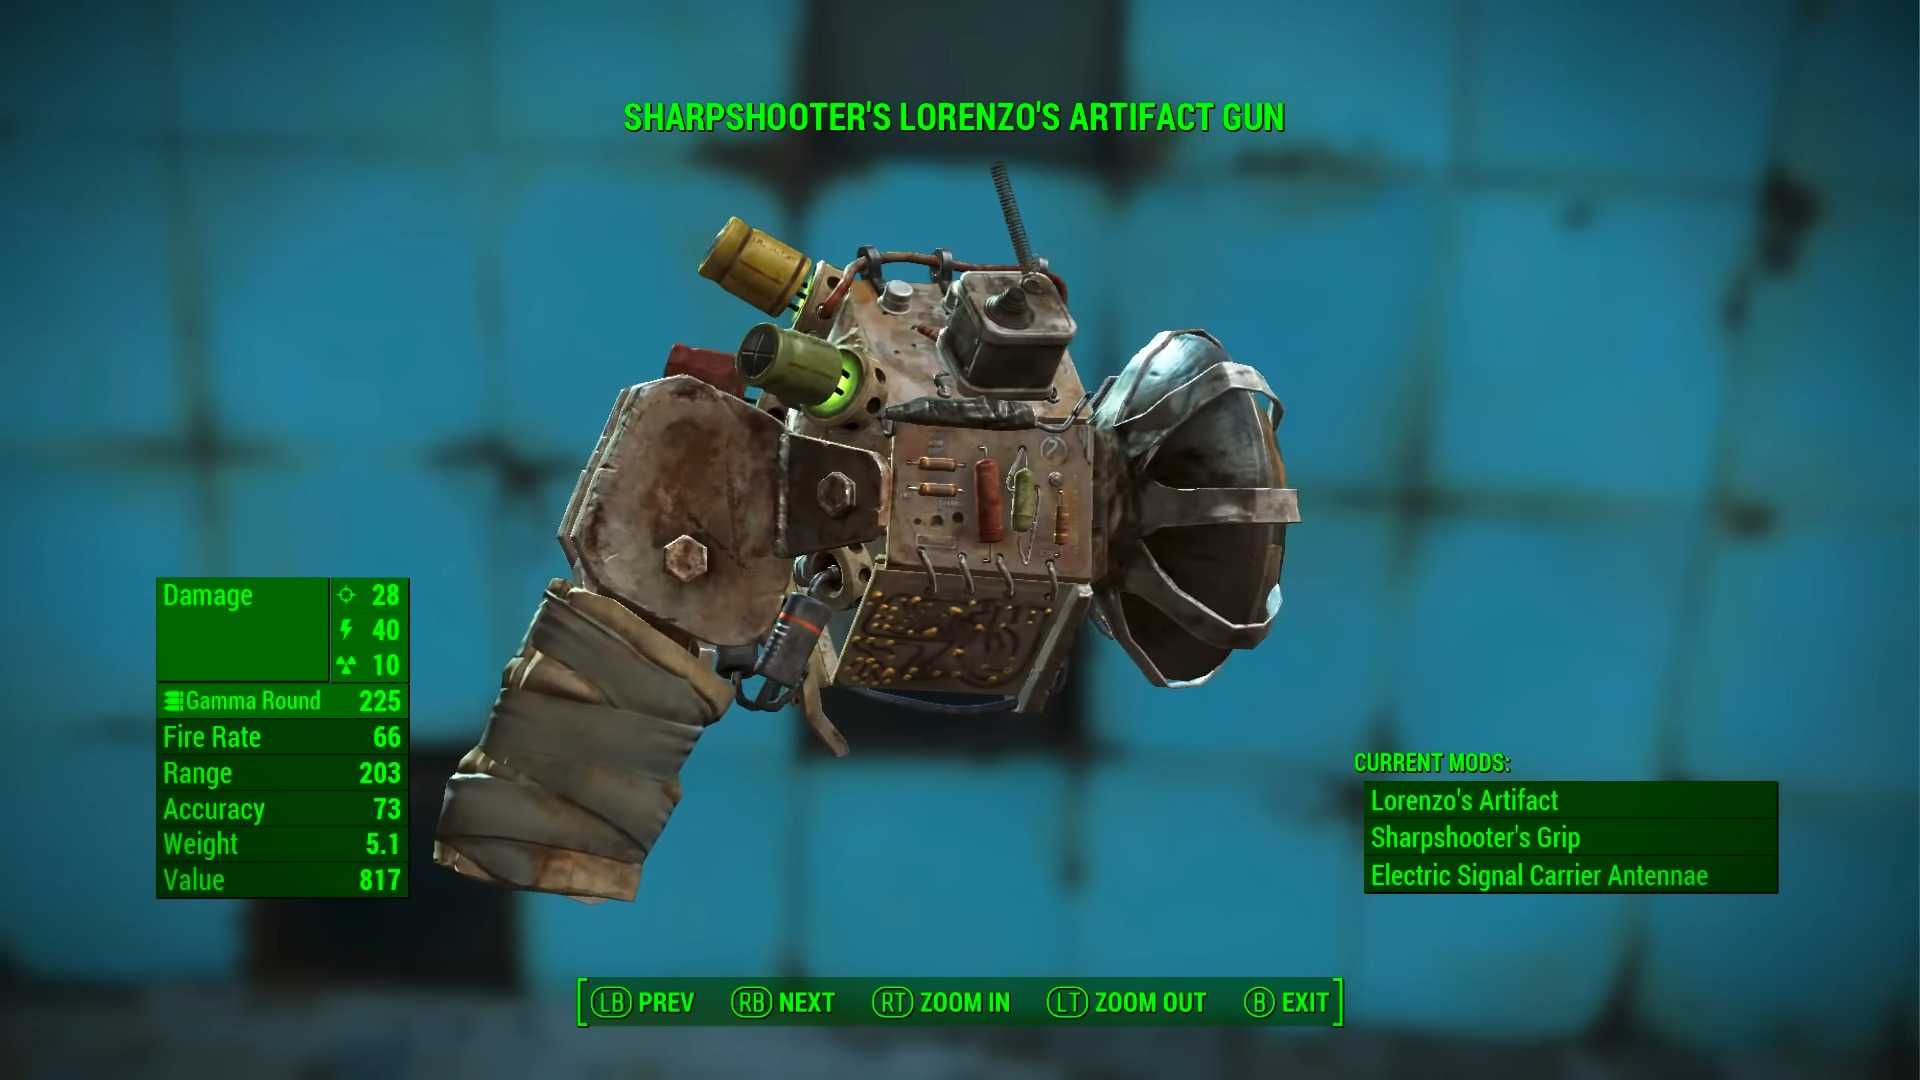 Lorenzo's Artifact Gun in Fallout 4